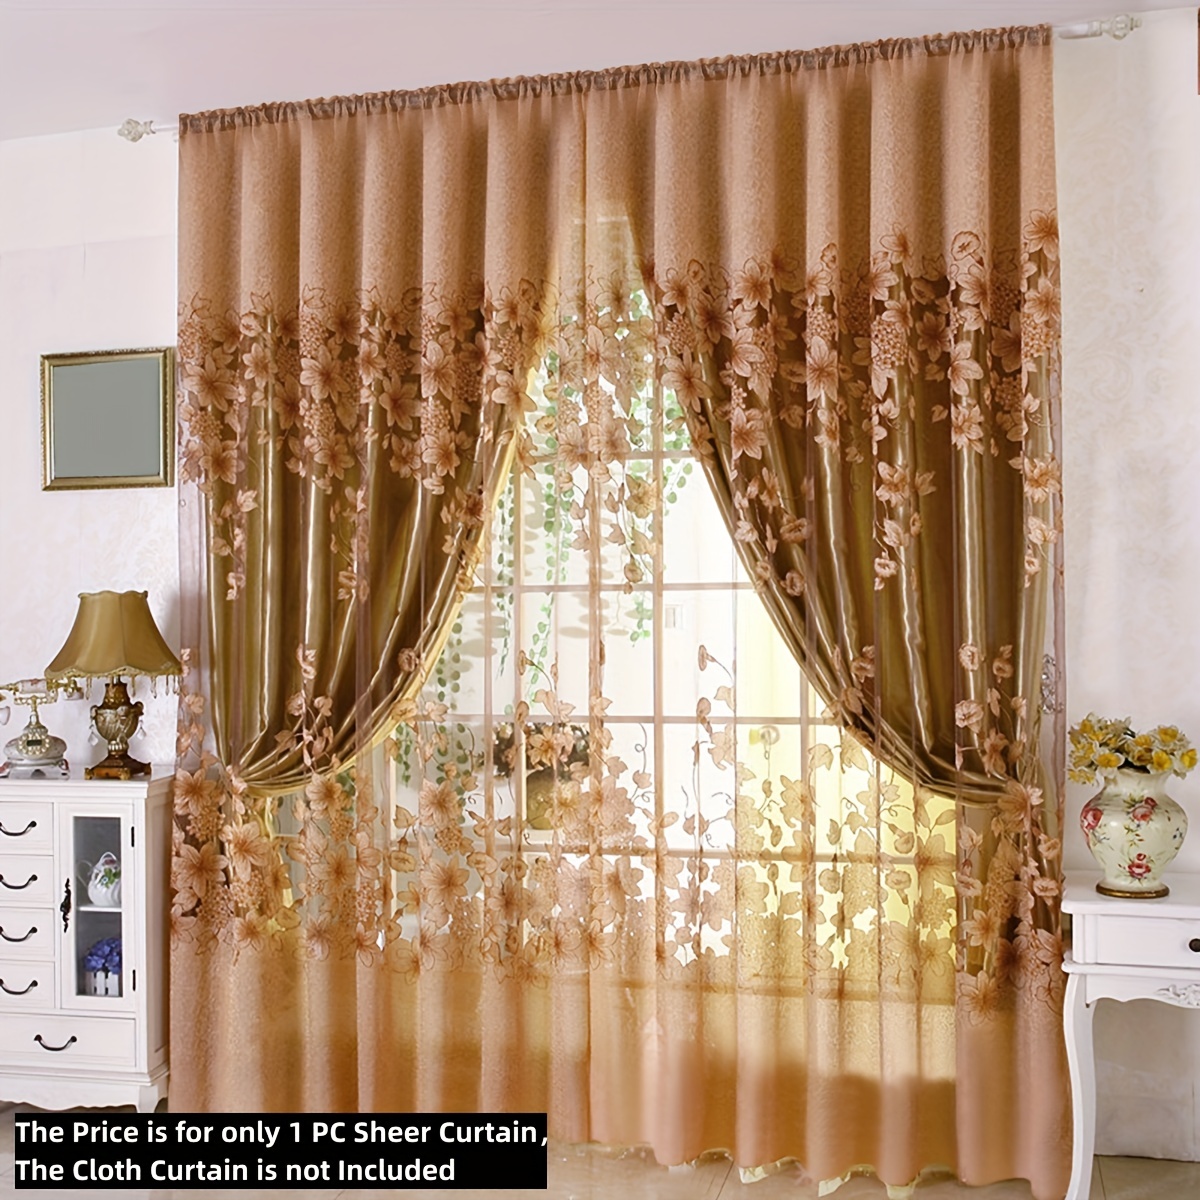 Cortinas elegantes de encaje hueco para puerta, cortinas romanas